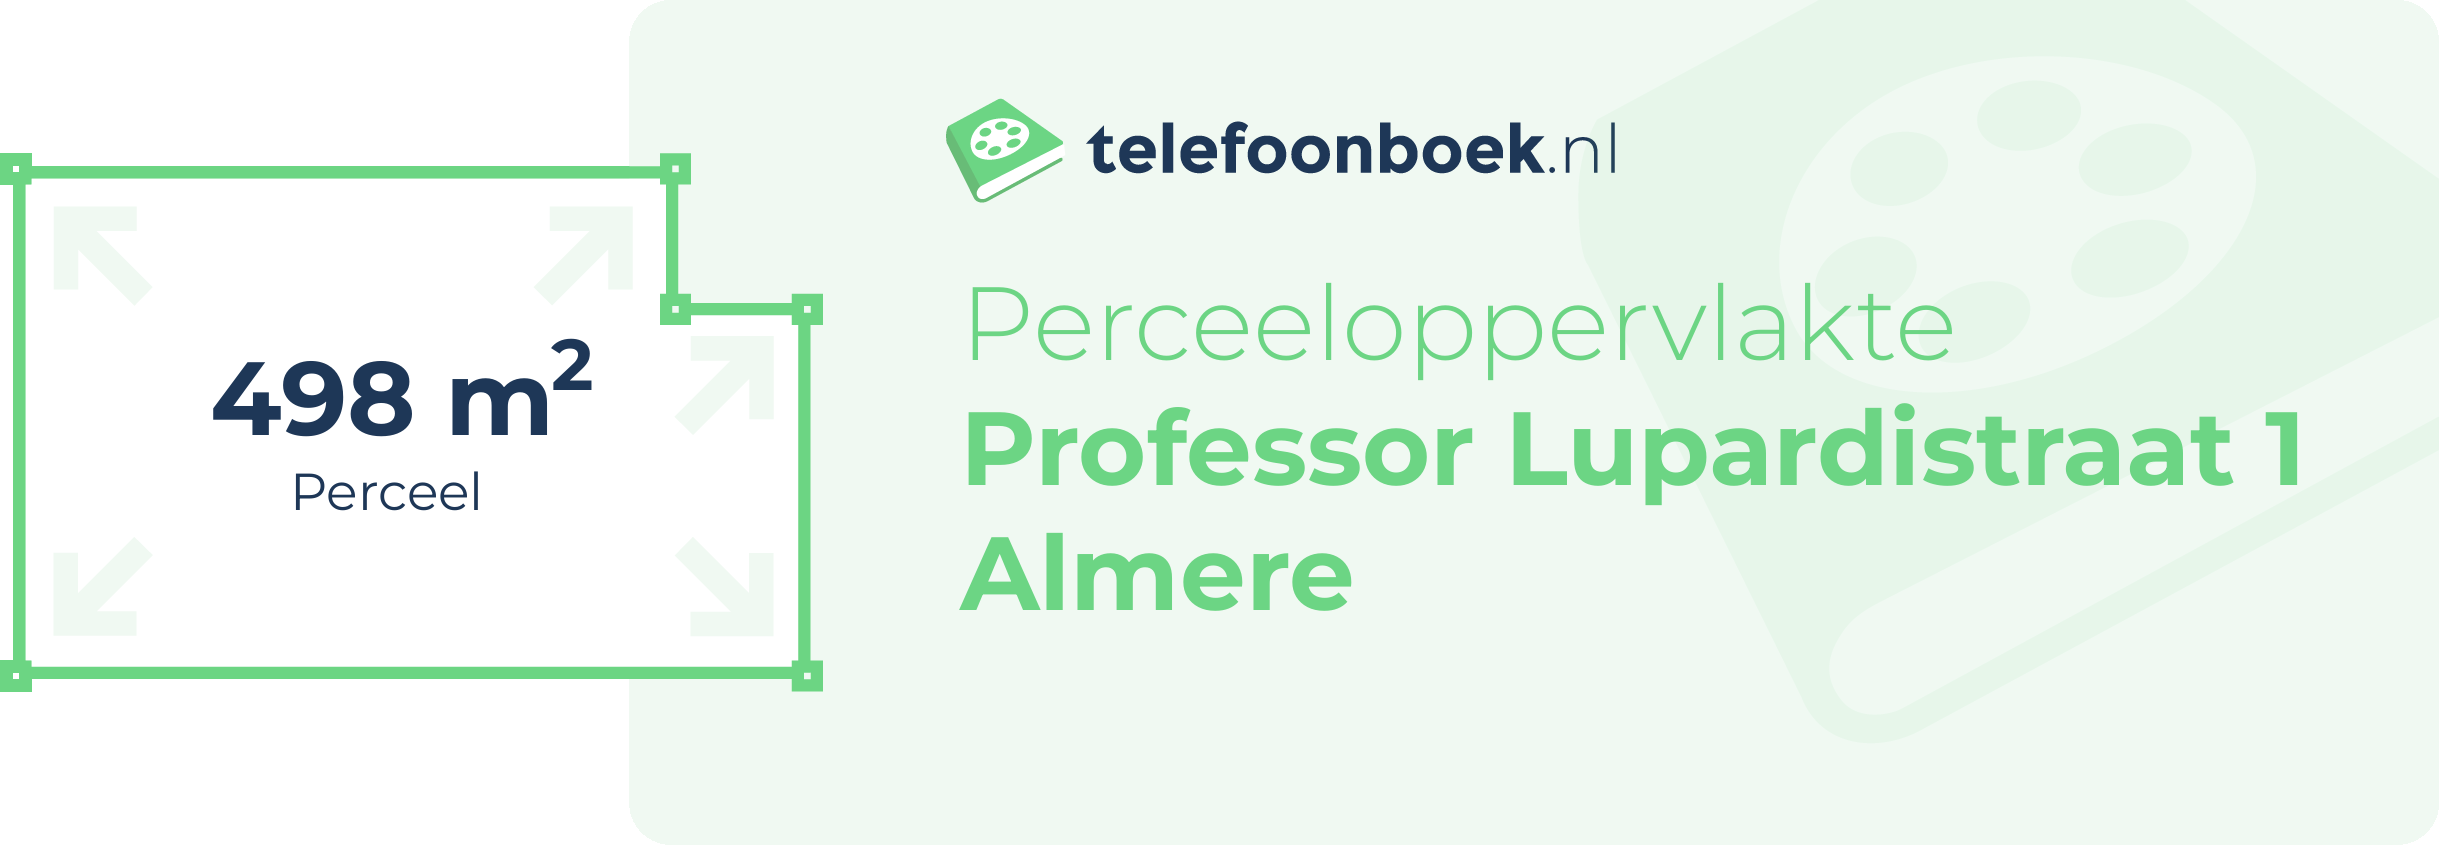 Perceeloppervlakte Professor Lupardistraat 1 Almere